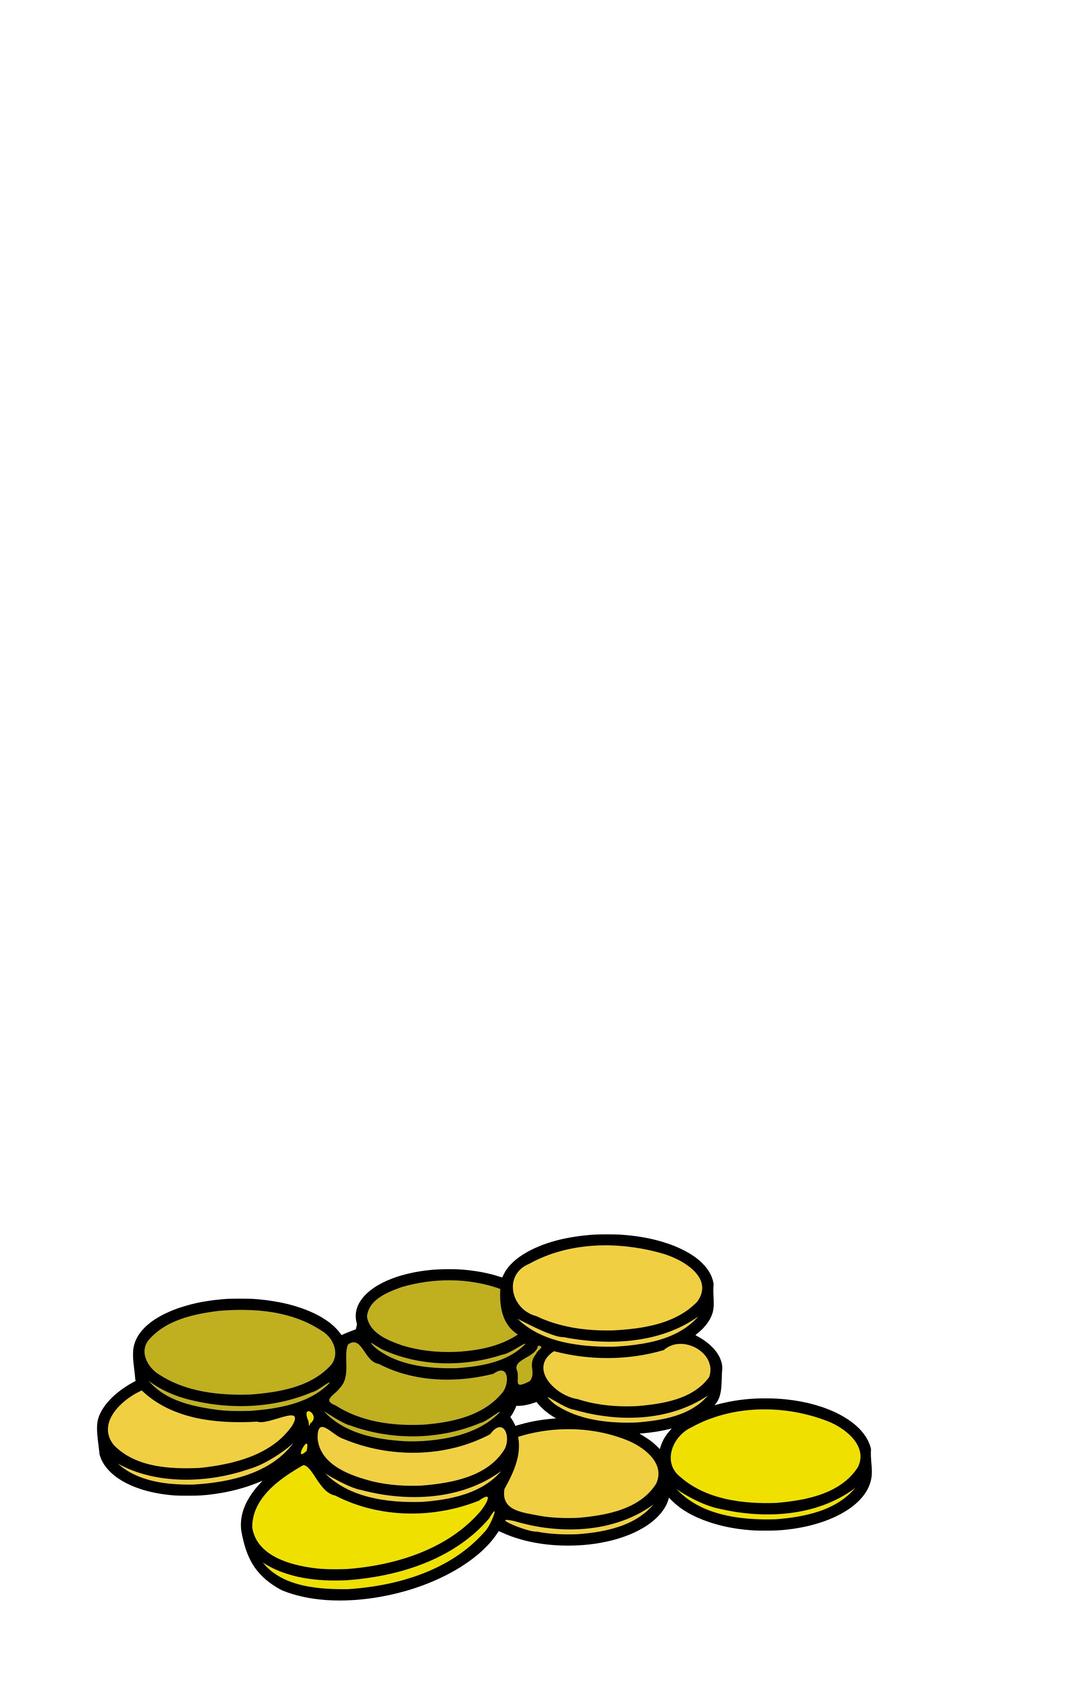 coins-1 png transparent